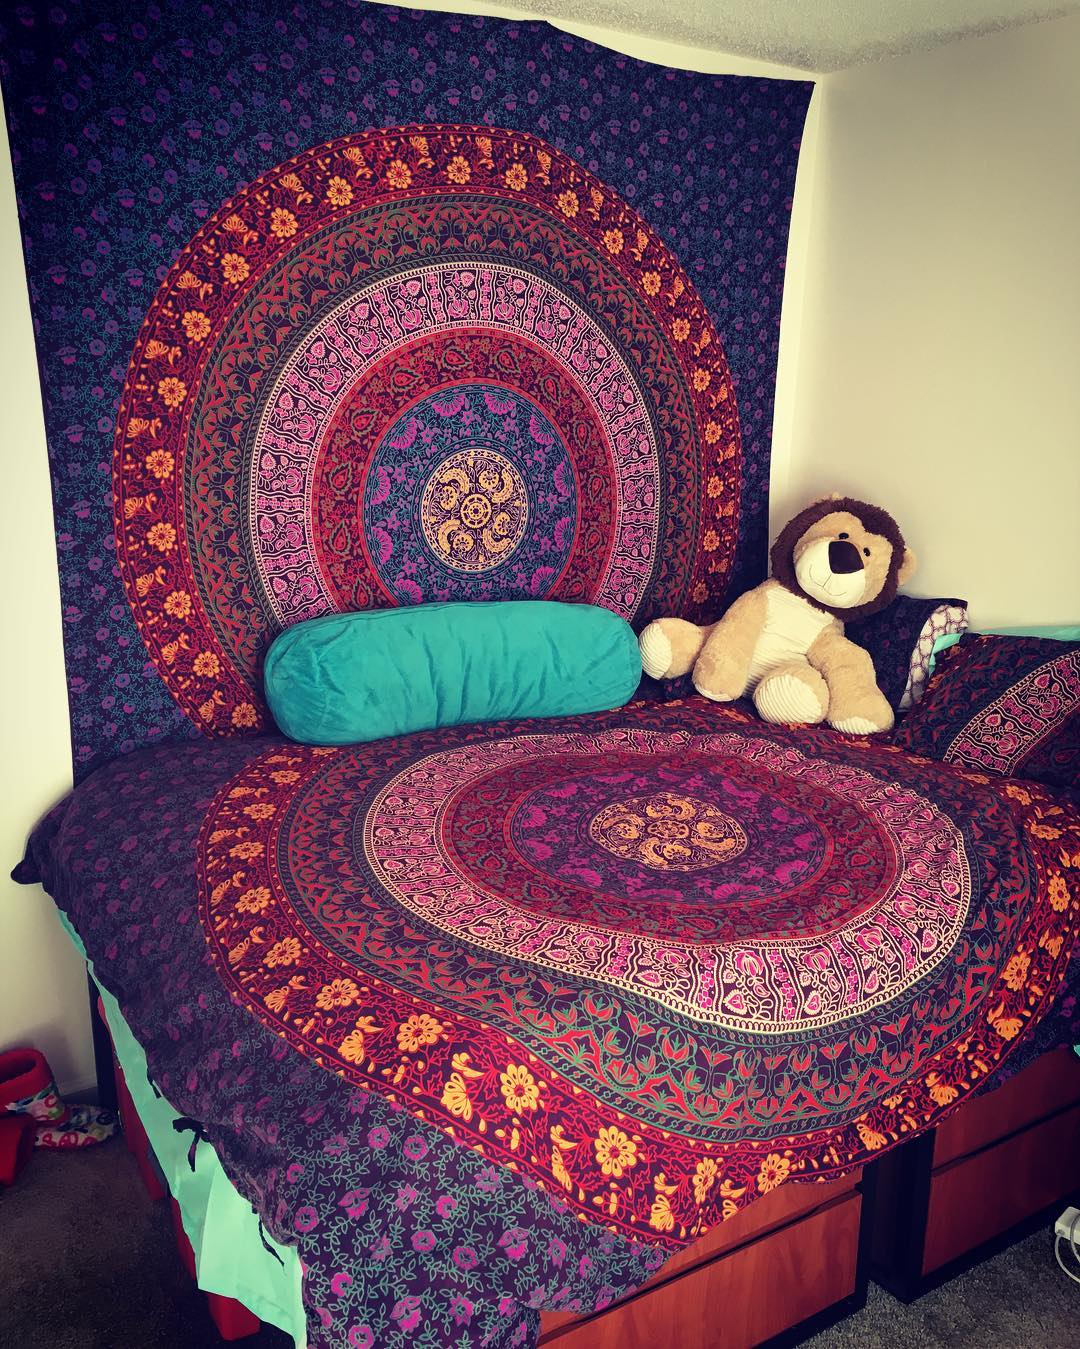 Loving my new room 😍 #tapestry #tapestries #mandalatapestry #dorm #dormdecor #apartmentdecor #royalfurnish